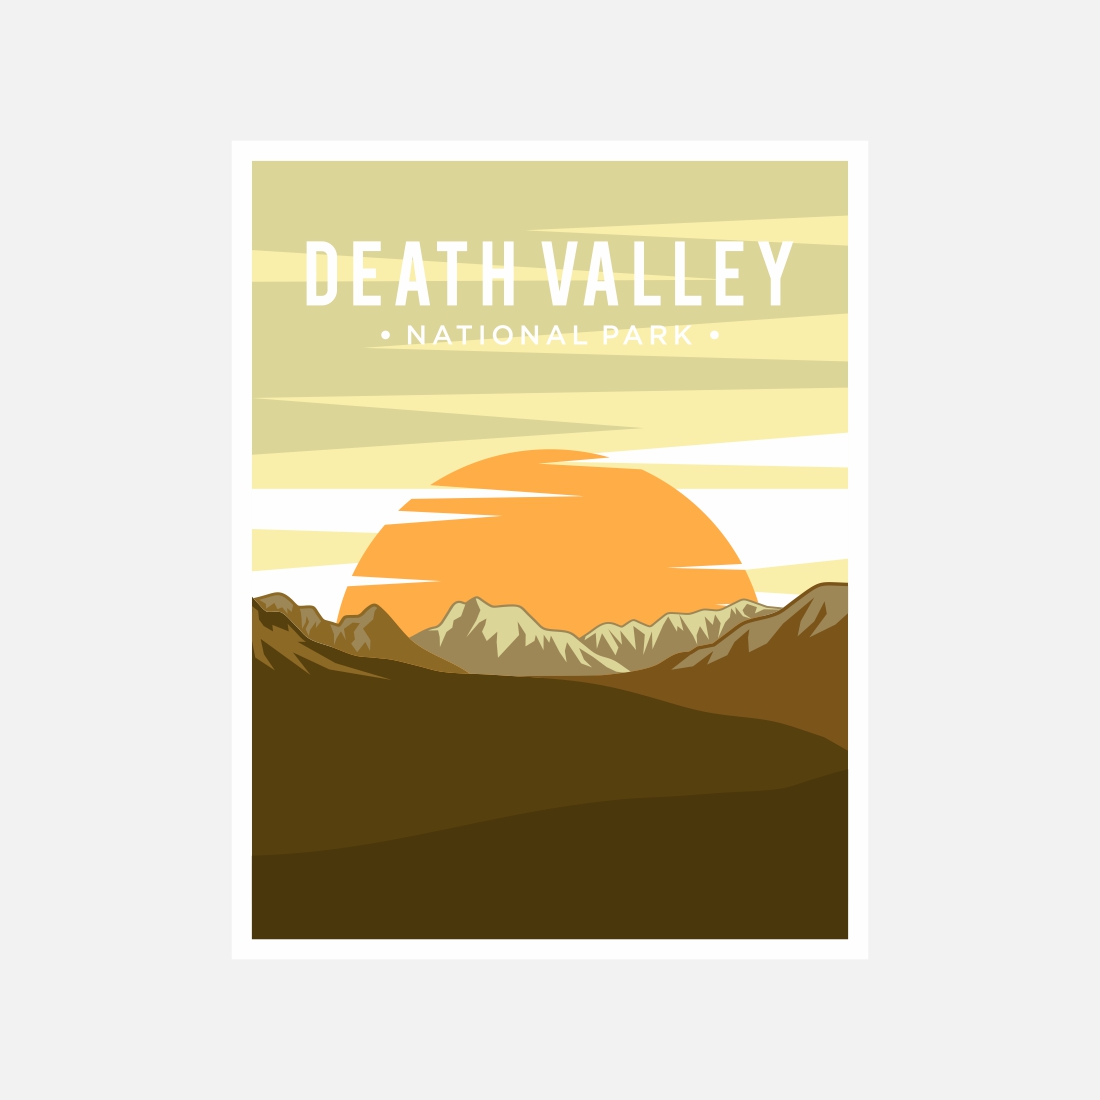 Death Valley National Park poster vector illustration design – Only $8 preview image.